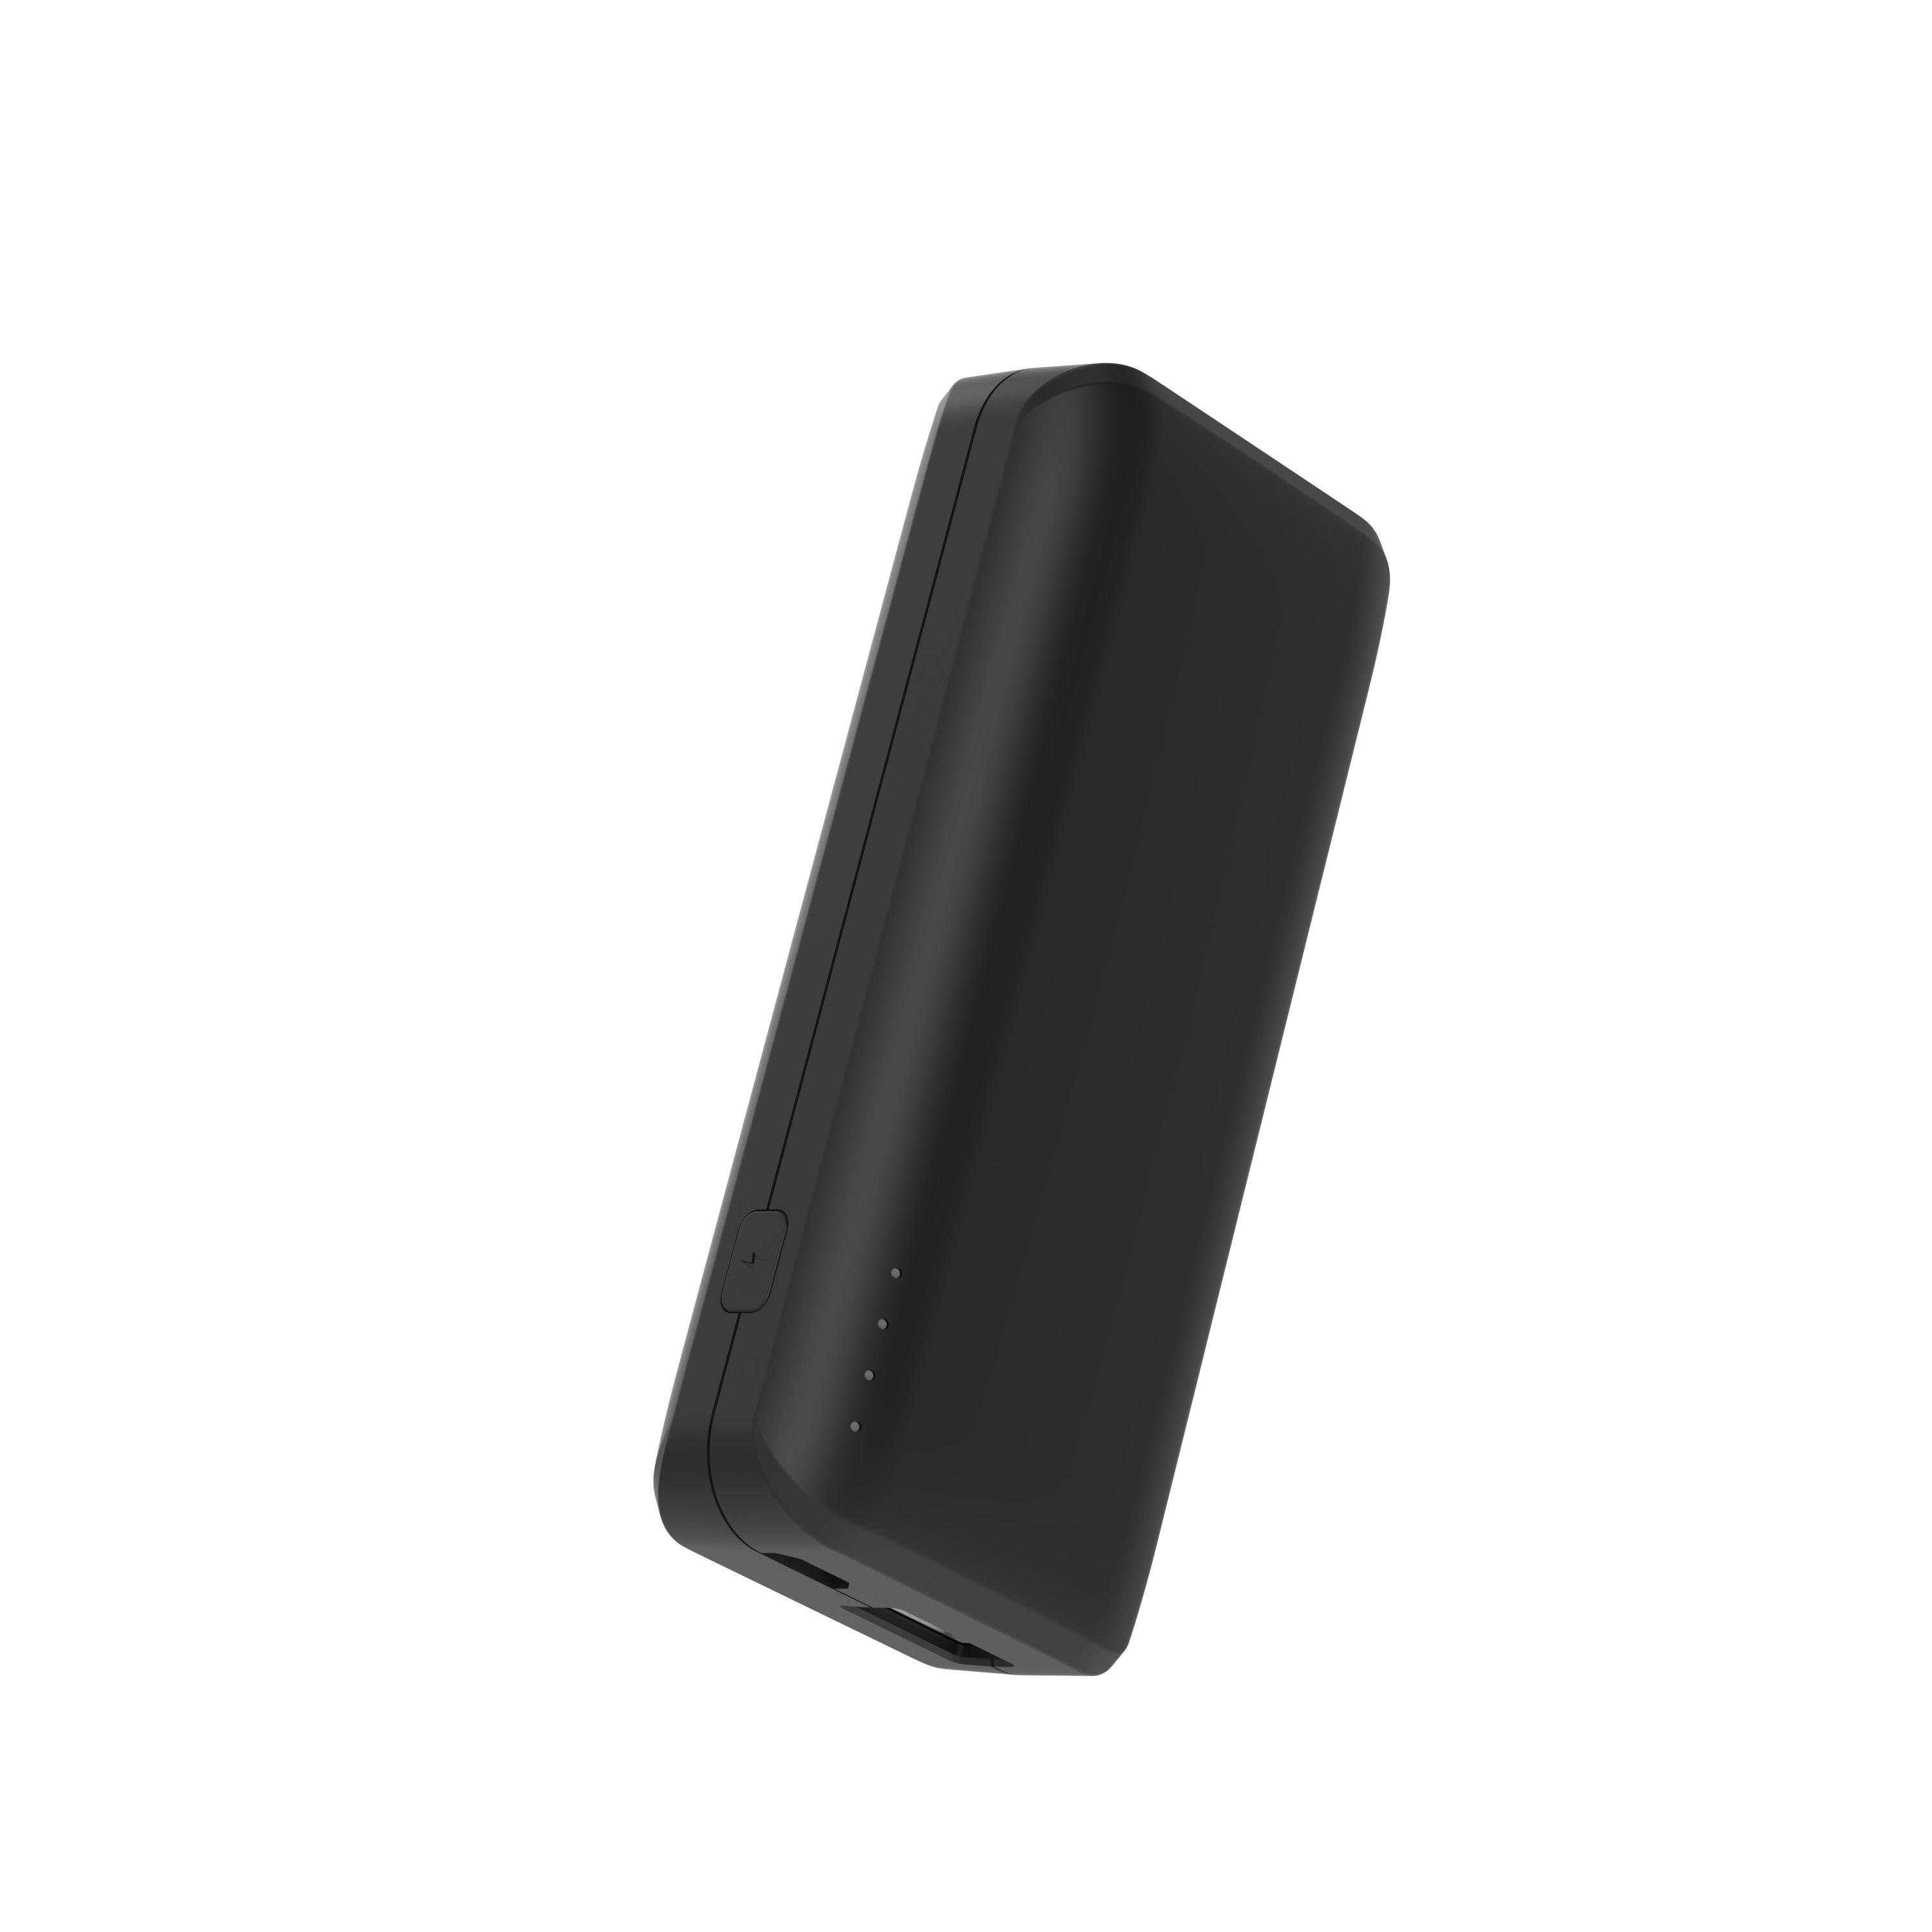 Actie klink meubilair Atrix 4K Powerbank with Micro USB Charging Cable | GameStop